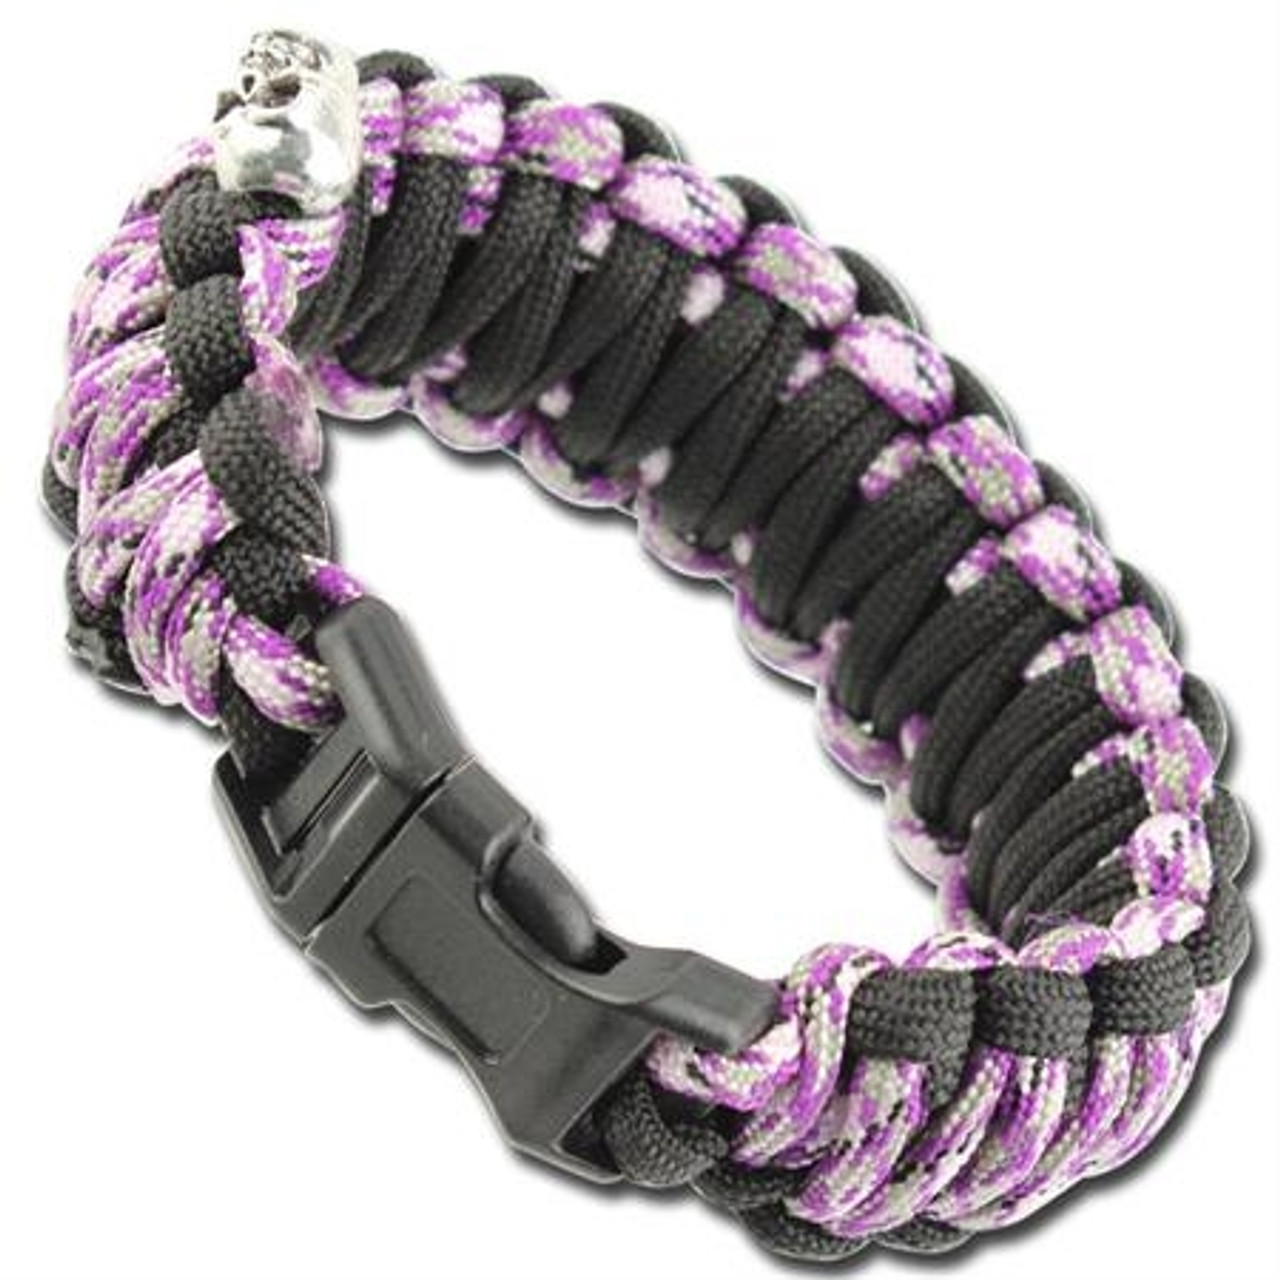 Skullz Survival Military Paracord Bracelet-Purple Camo & Whitetary-Paracord -Bracelet-Purple-Camo-Black